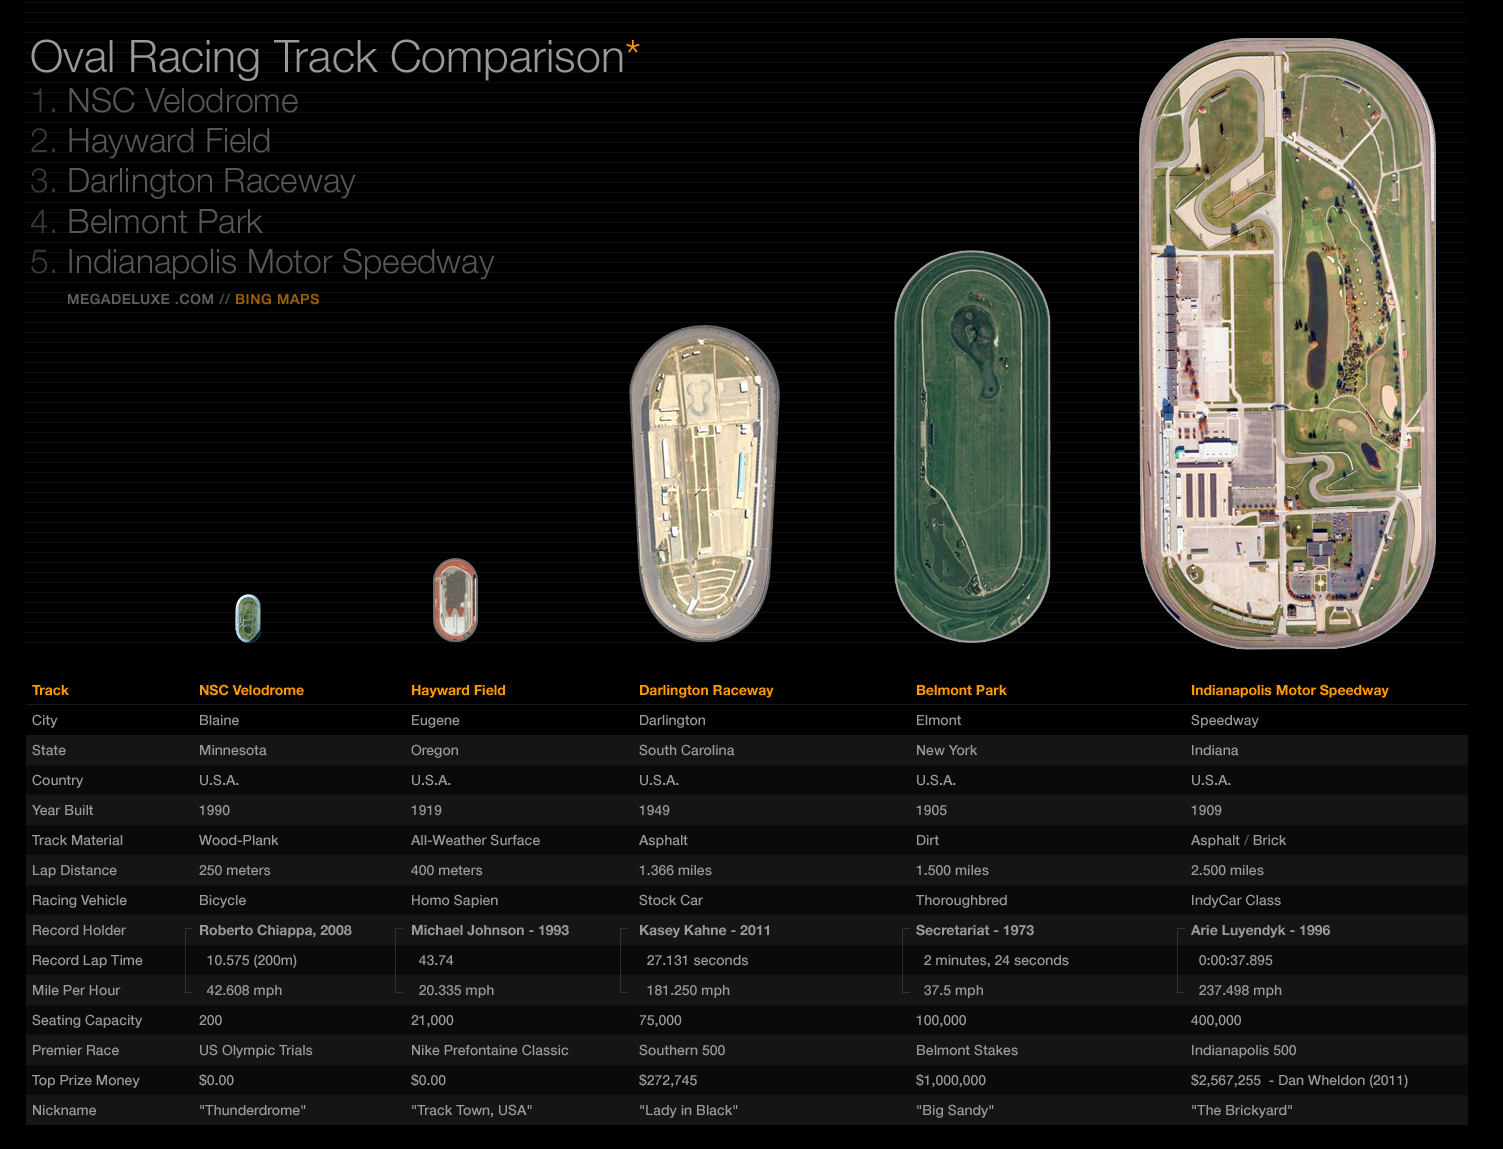 Oval Racing Track Comparison U.S.A.